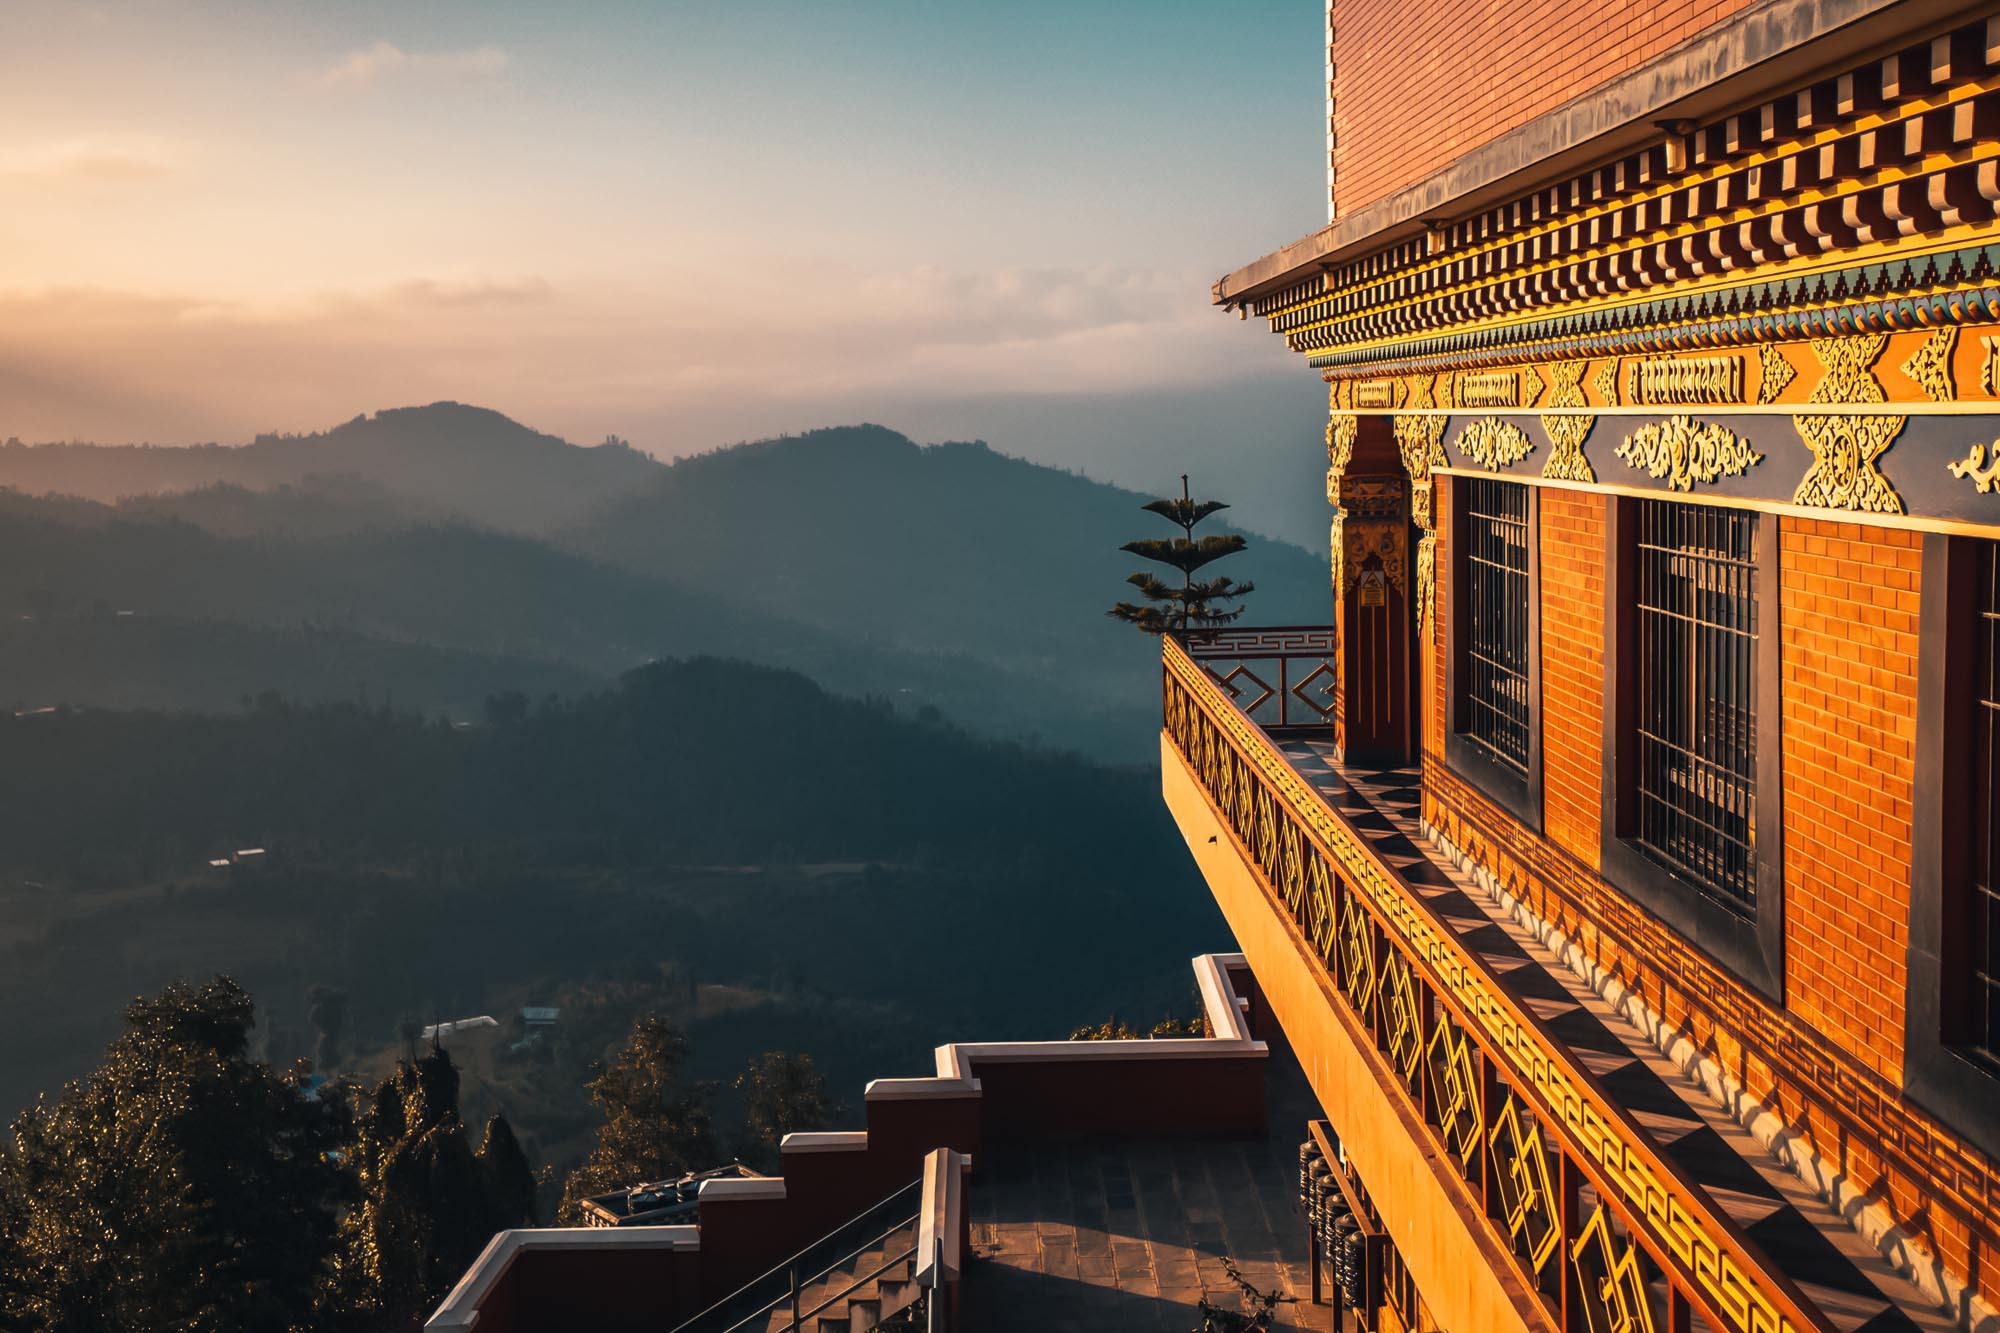 Bhutan Best Things to Do in Trongsa,Best Time to Visit Trongsa,Where to Stay in Trongsa,Where to Eat in Trongsa,things to do in Trongsa,Trongsa Dzong,Chendebji Chorten,Thruepang Palace,emji Village